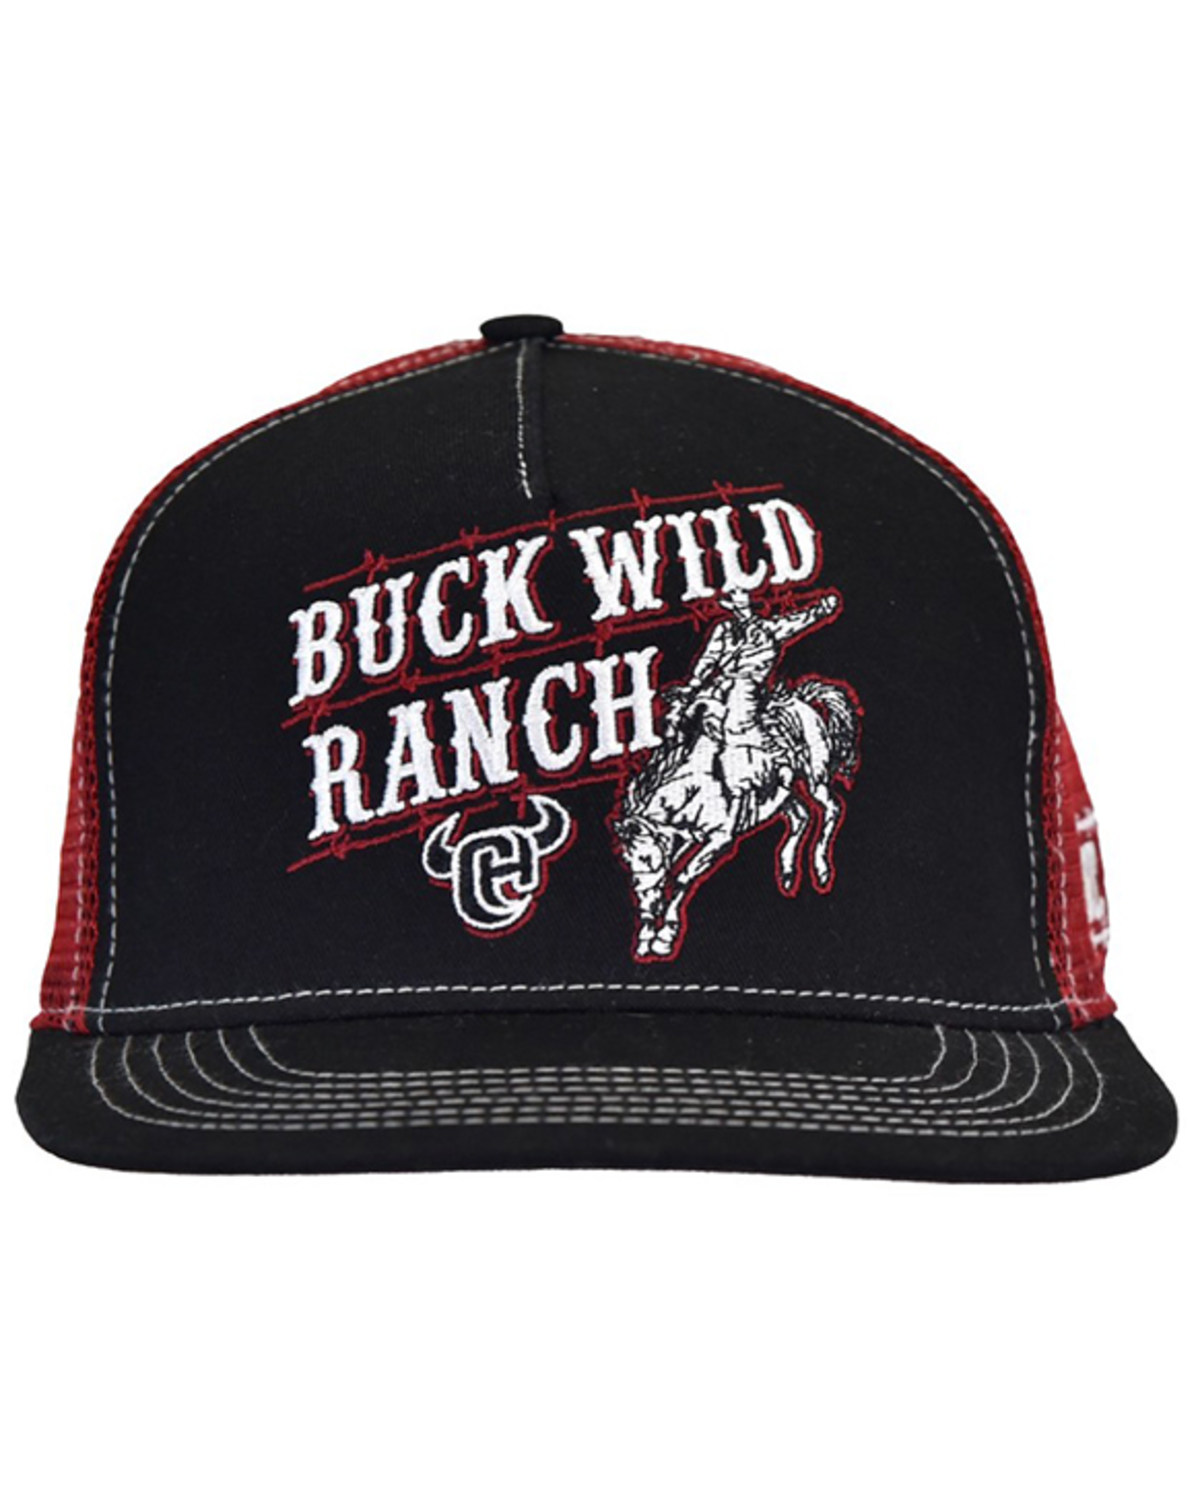 Cowboy Hardware Men's Buck Wild Flat Baseball Cap